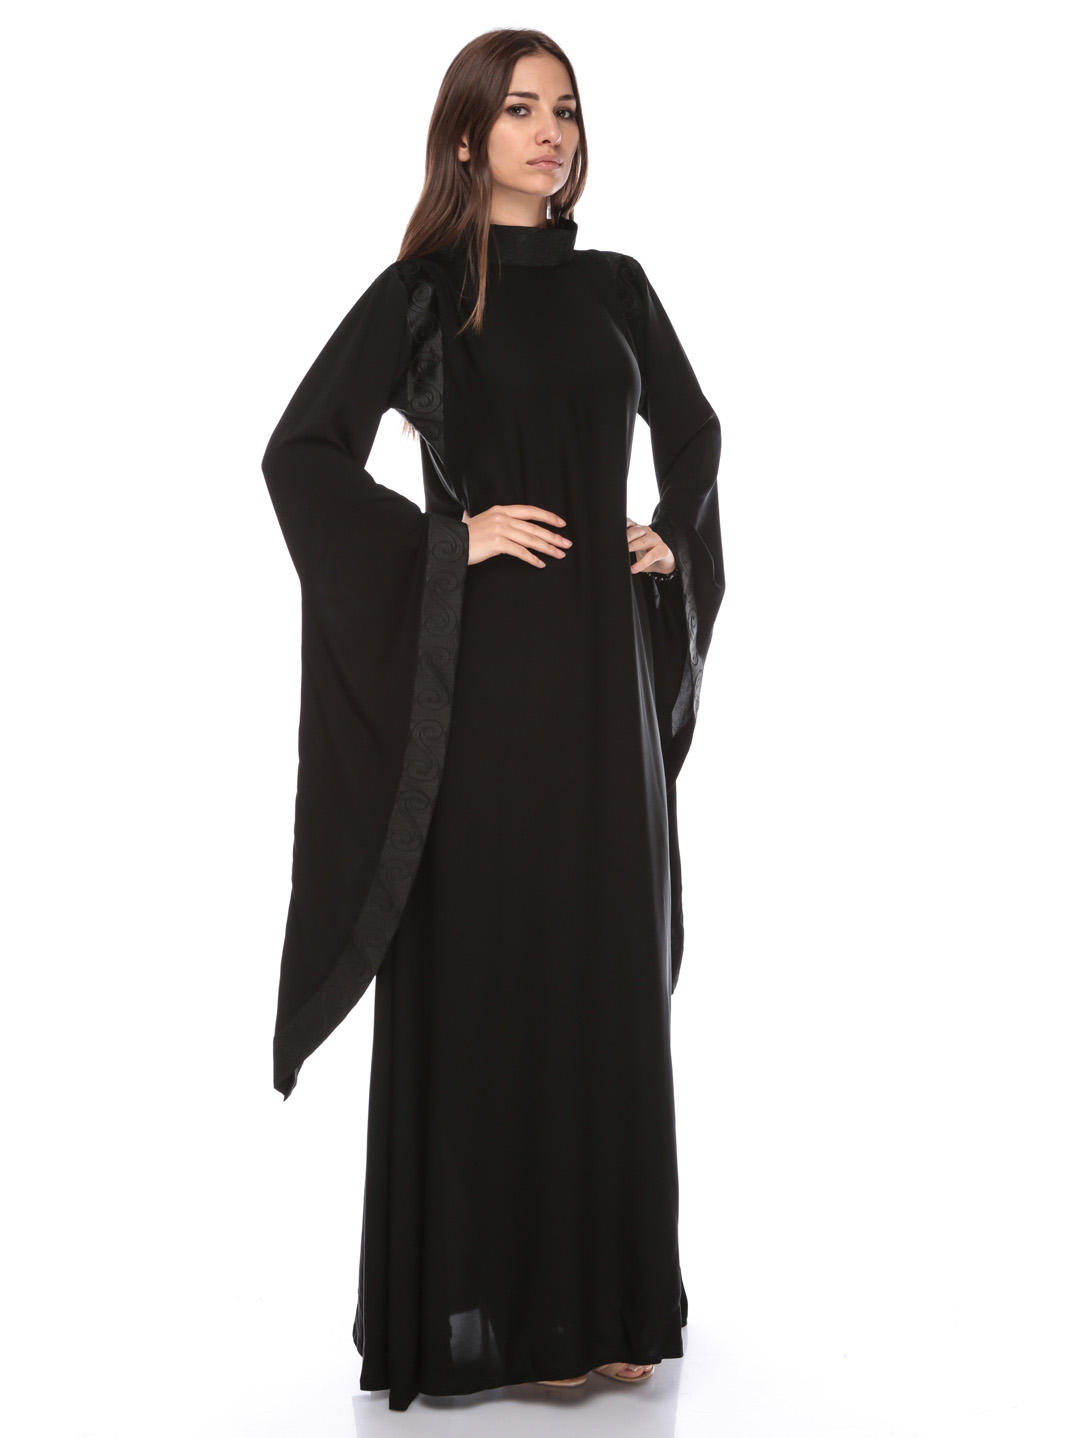 Jalabiya Designs 2013 | Arabic Kaftan Dresses Collection for Girls - New Fresh Fashion1080 x 1438